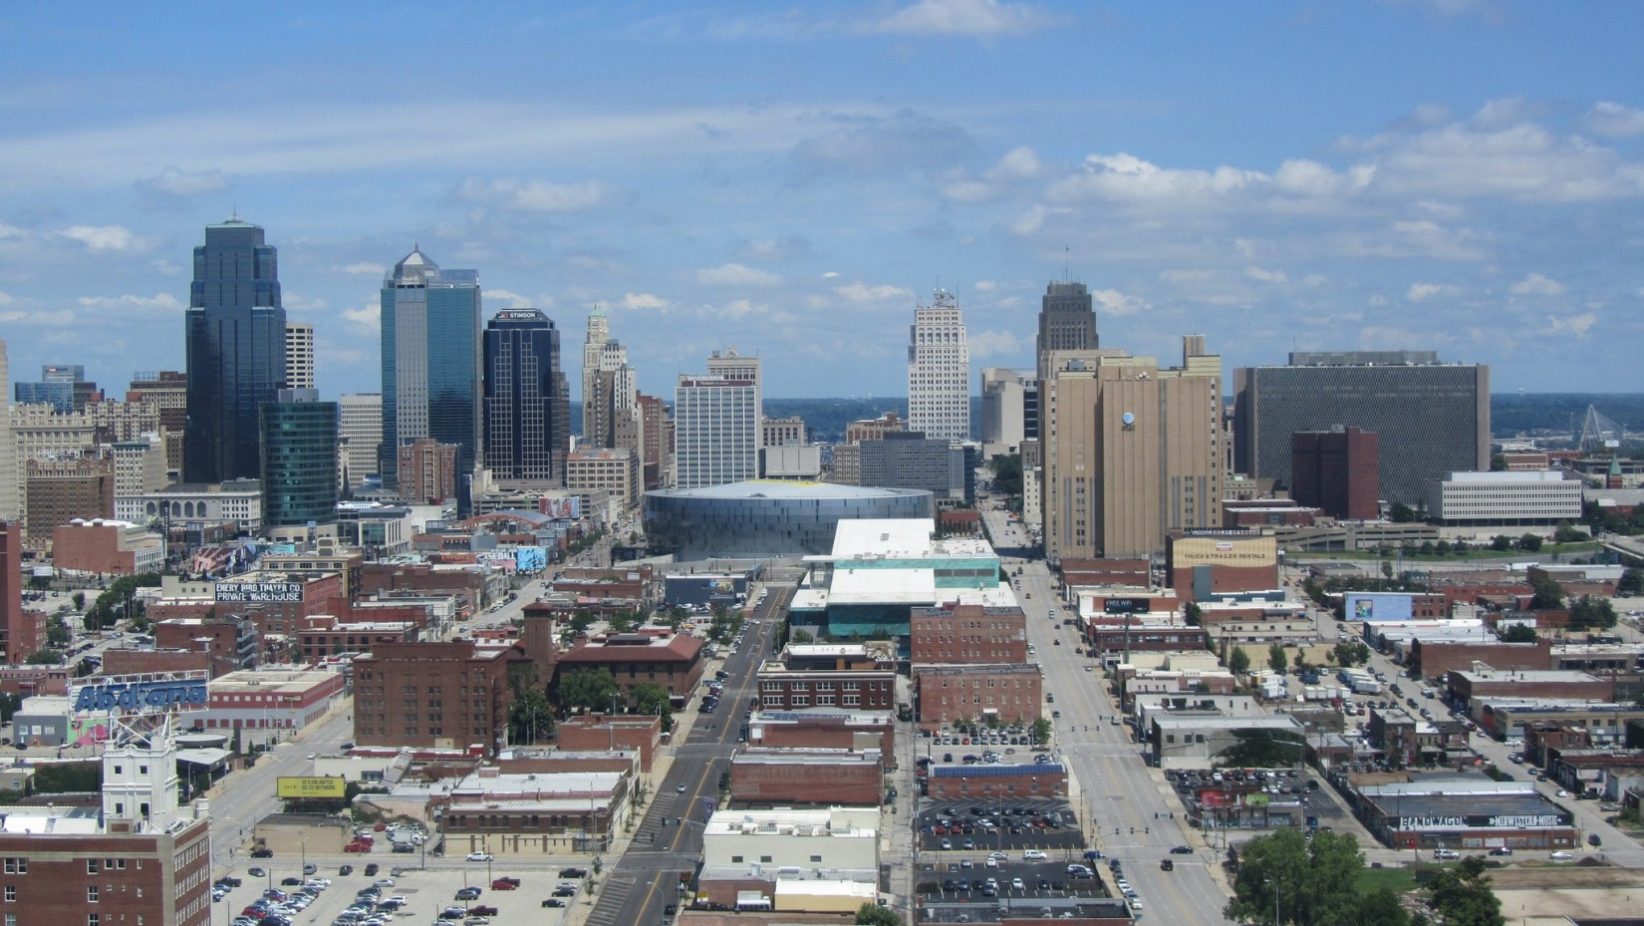 Addressing a market gap, $25M seed fund arrives in Kansas City